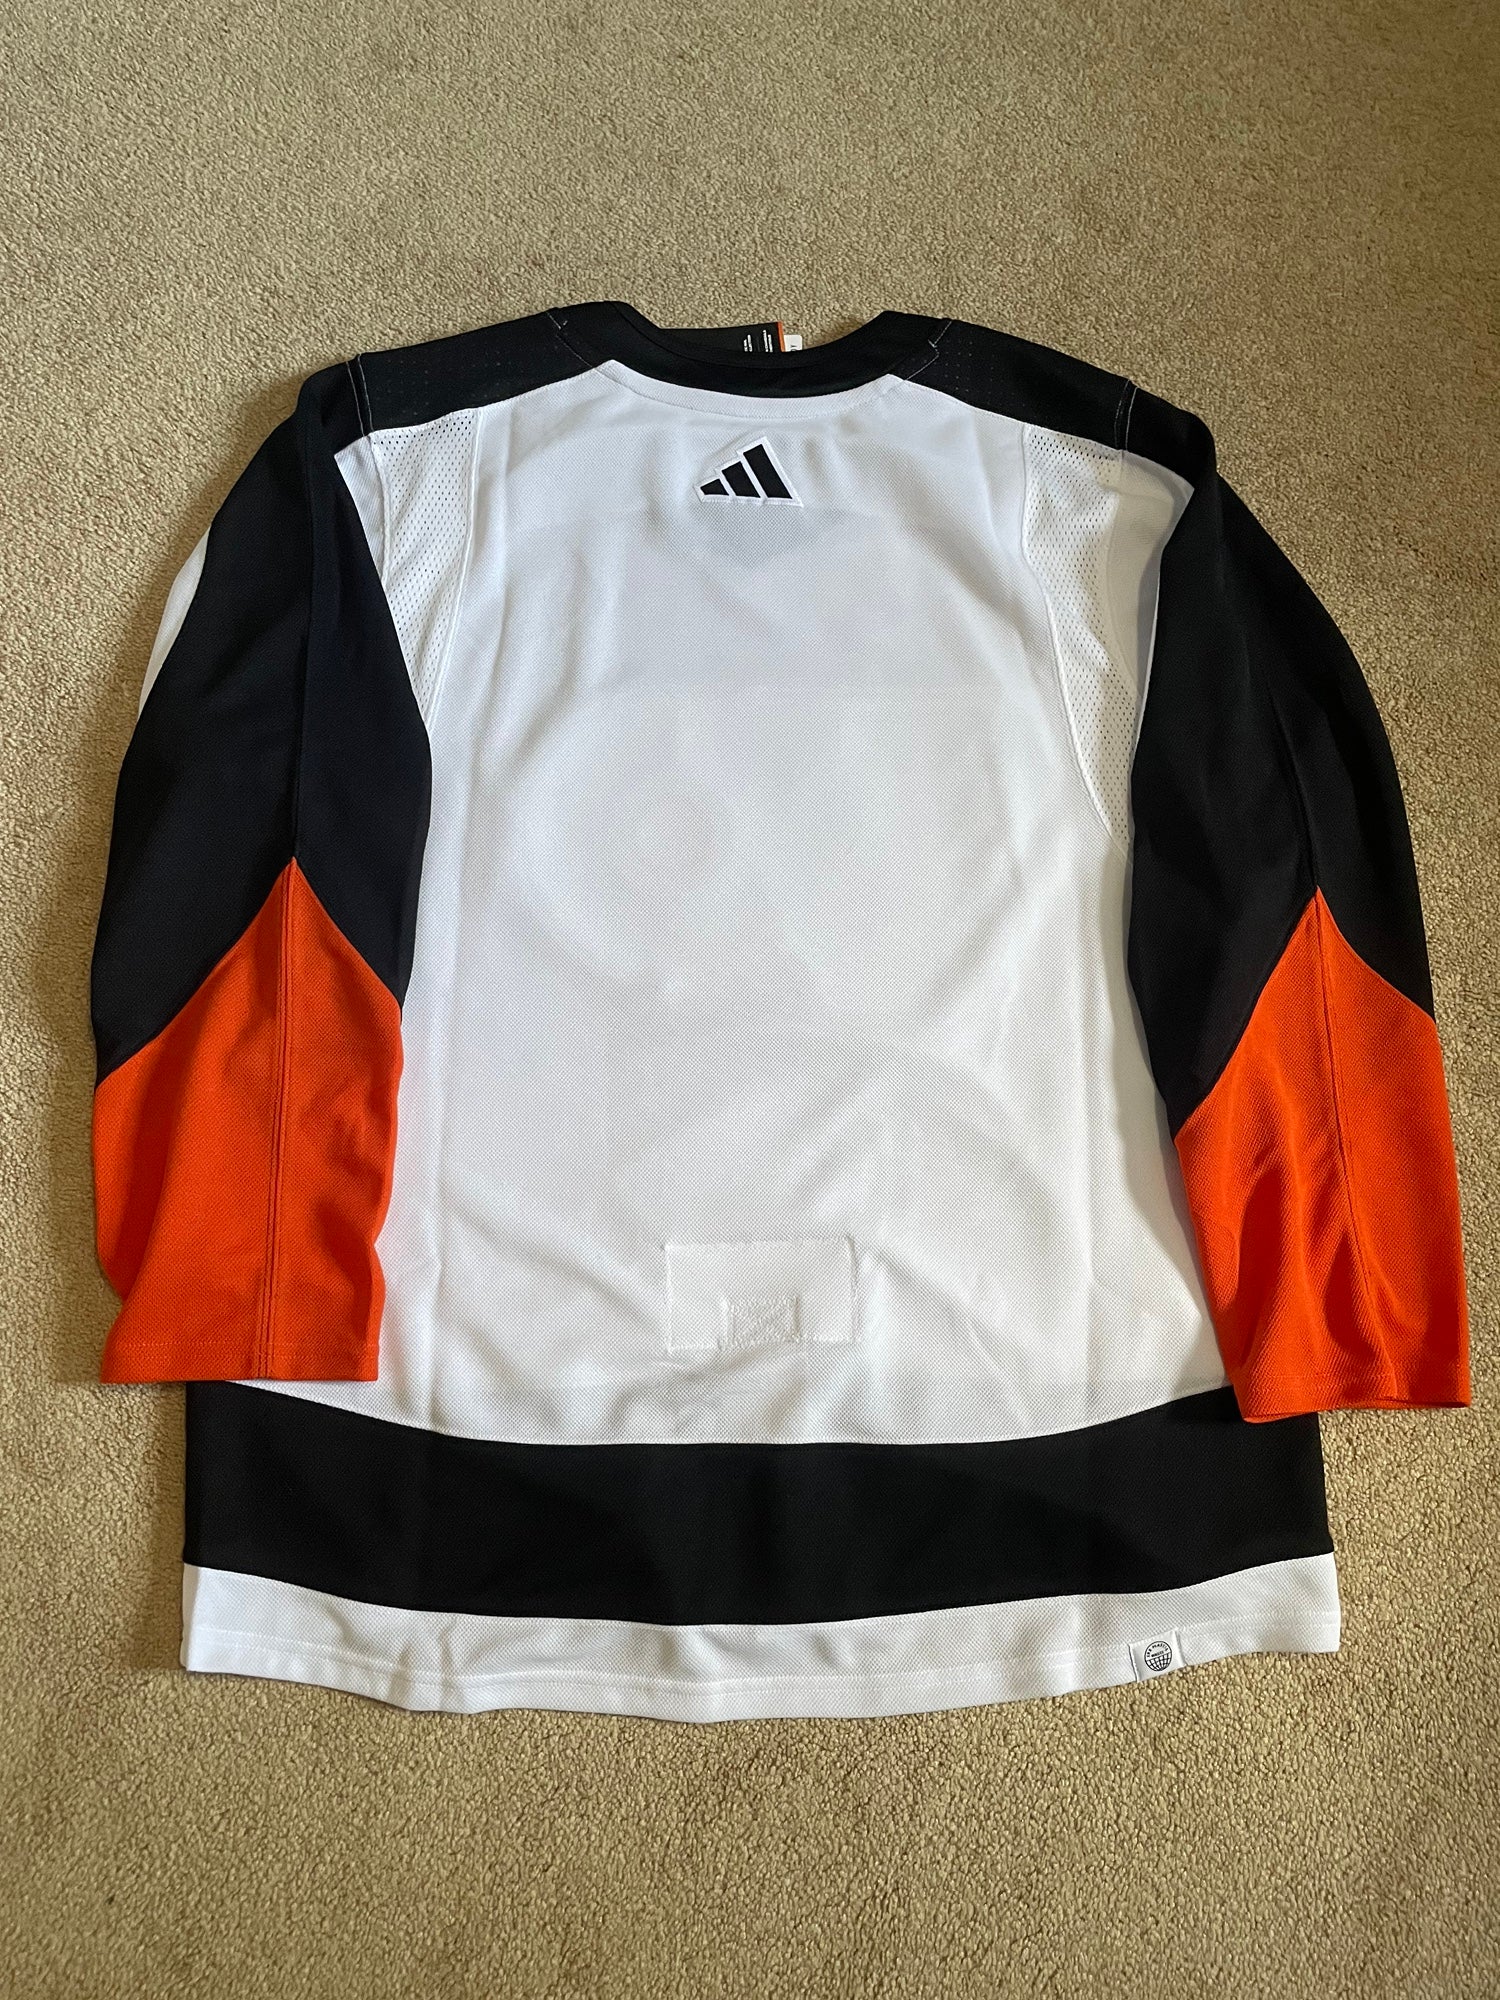 Adidas Reverse Retro 2.0 Authentic Hockey Jersey - Philadelphia Flyers -  Adult